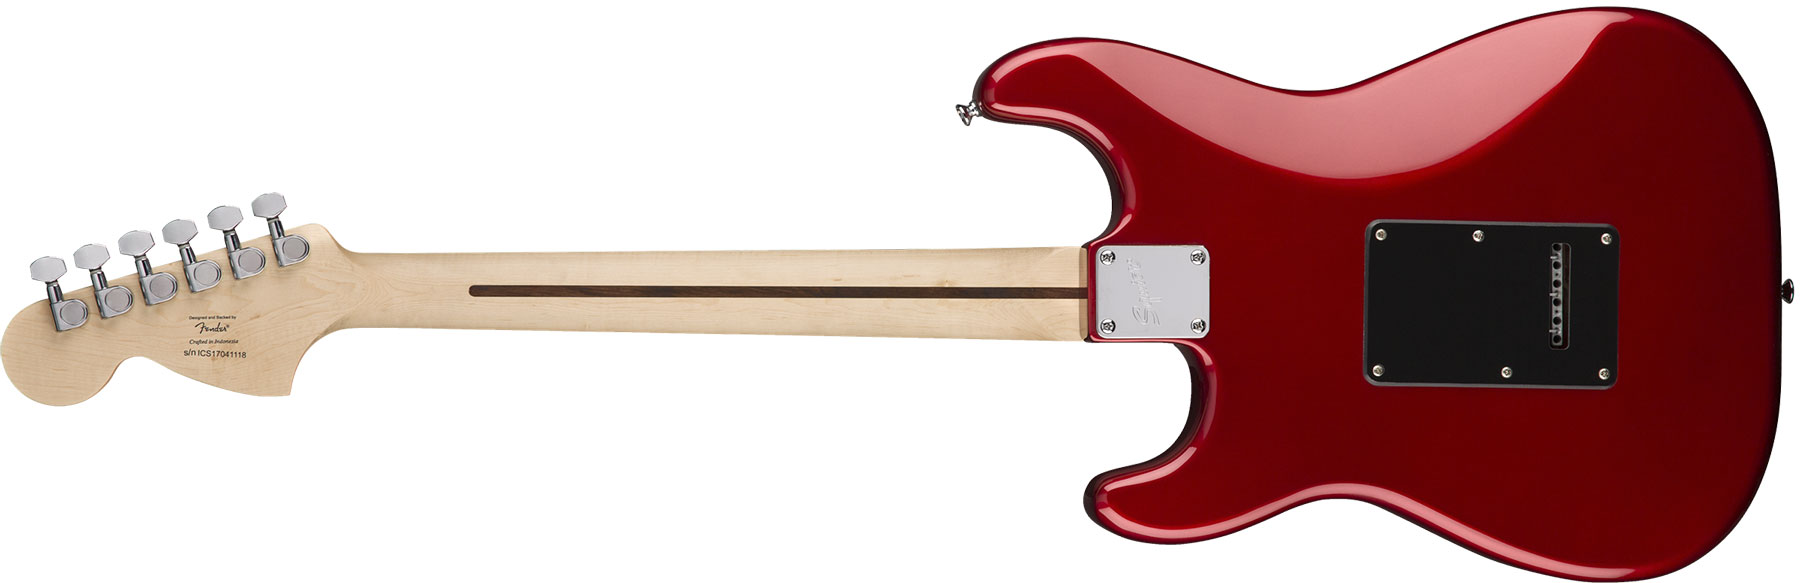 Squier Strat Affinity Hss Pack +fender Frontman 15g Trem Lau - Candy Apple Red - Electric guitar set - Variation 2